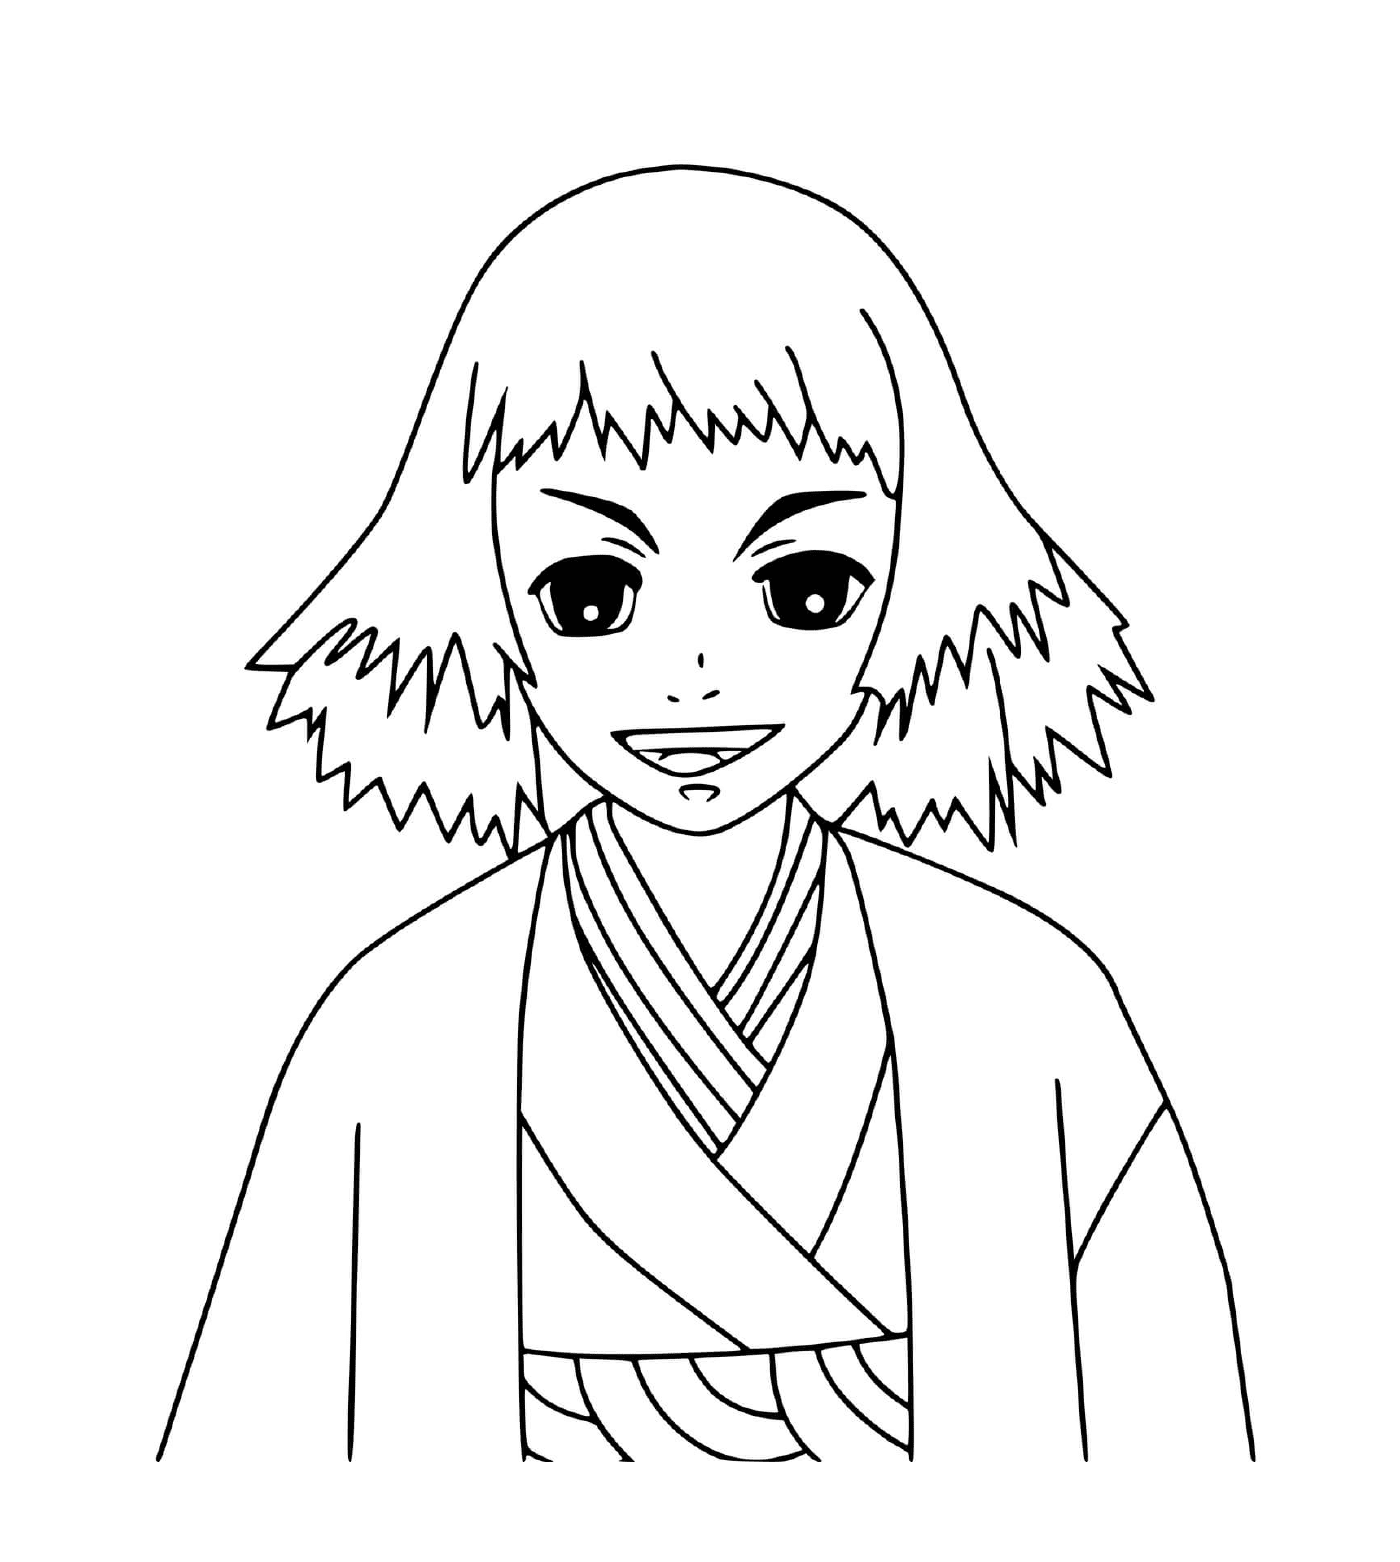  सुमामागू एक किमोनो पहनाता है 